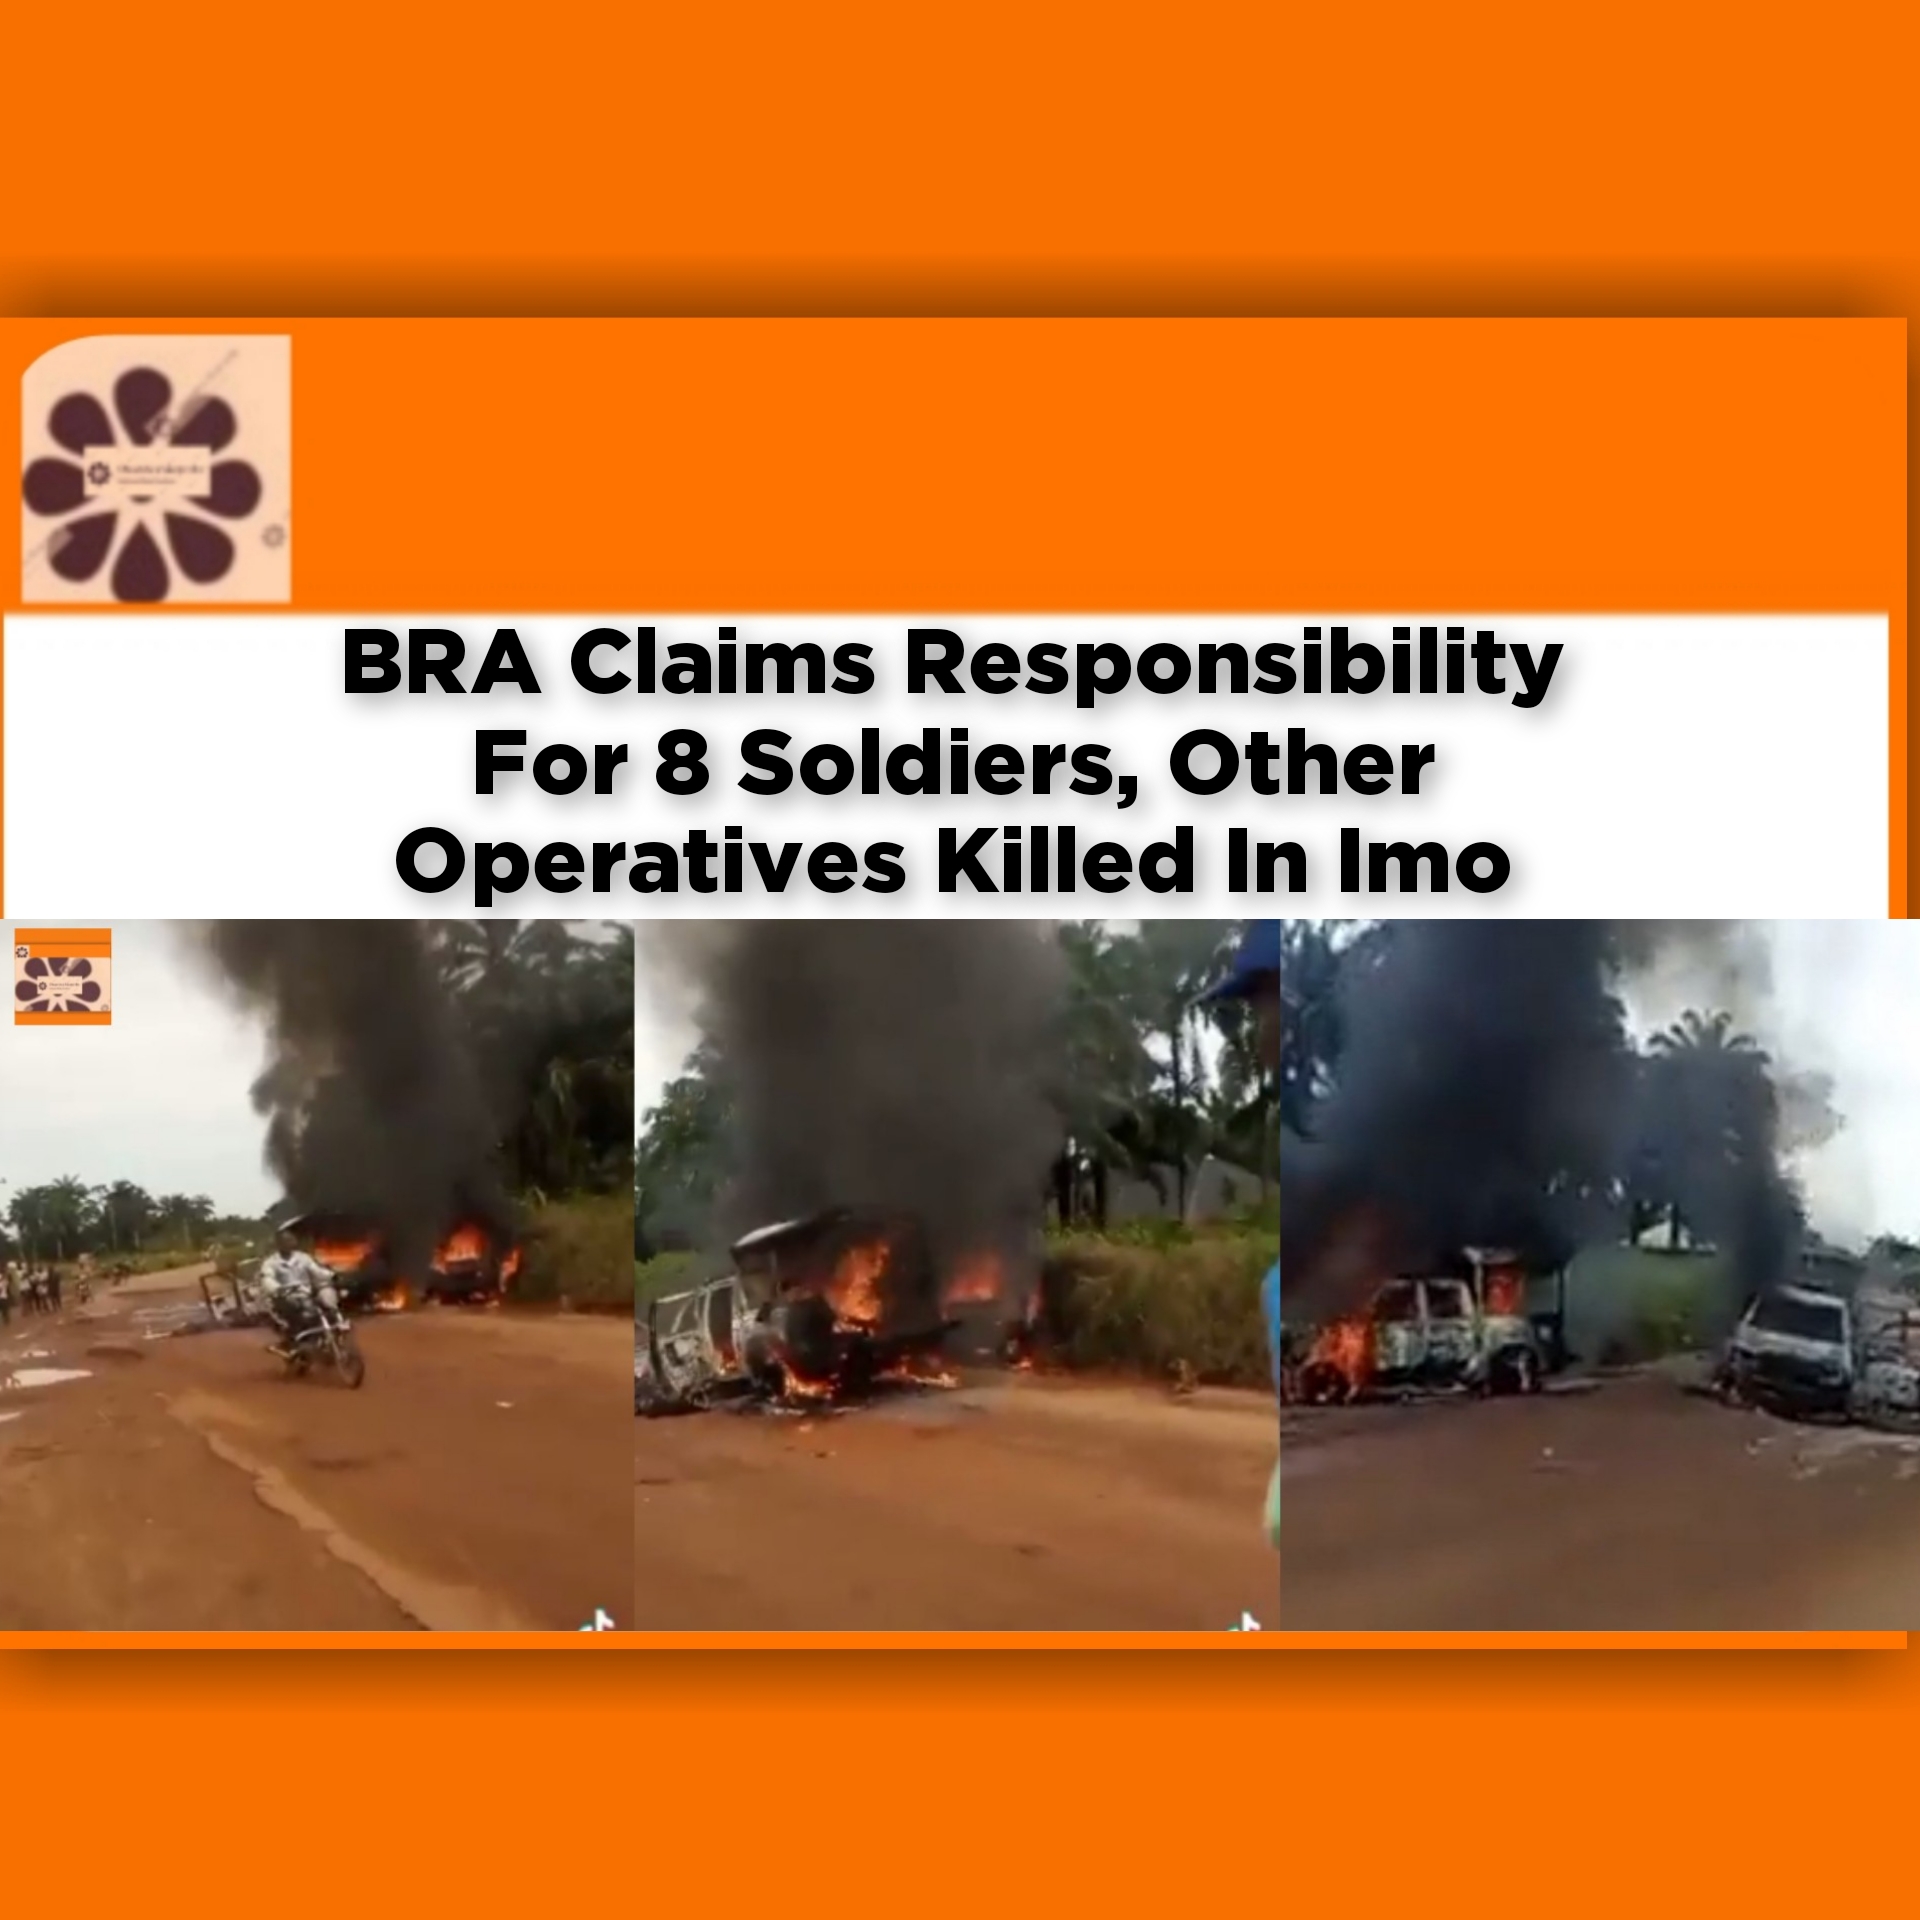 BRA Claims Responsibility For 8 Soldiers, Other Operatives Killed In Imo ~ OsazuwaAkonedo #Abia #Biafra #BRA #Ekpa #Gunmen #Imo #ipob #Ohafia #Simon #SitAtHome #Umualumaku #Unknown OsazuwaAkonedo,Trending,News,Home,Editorial Policy